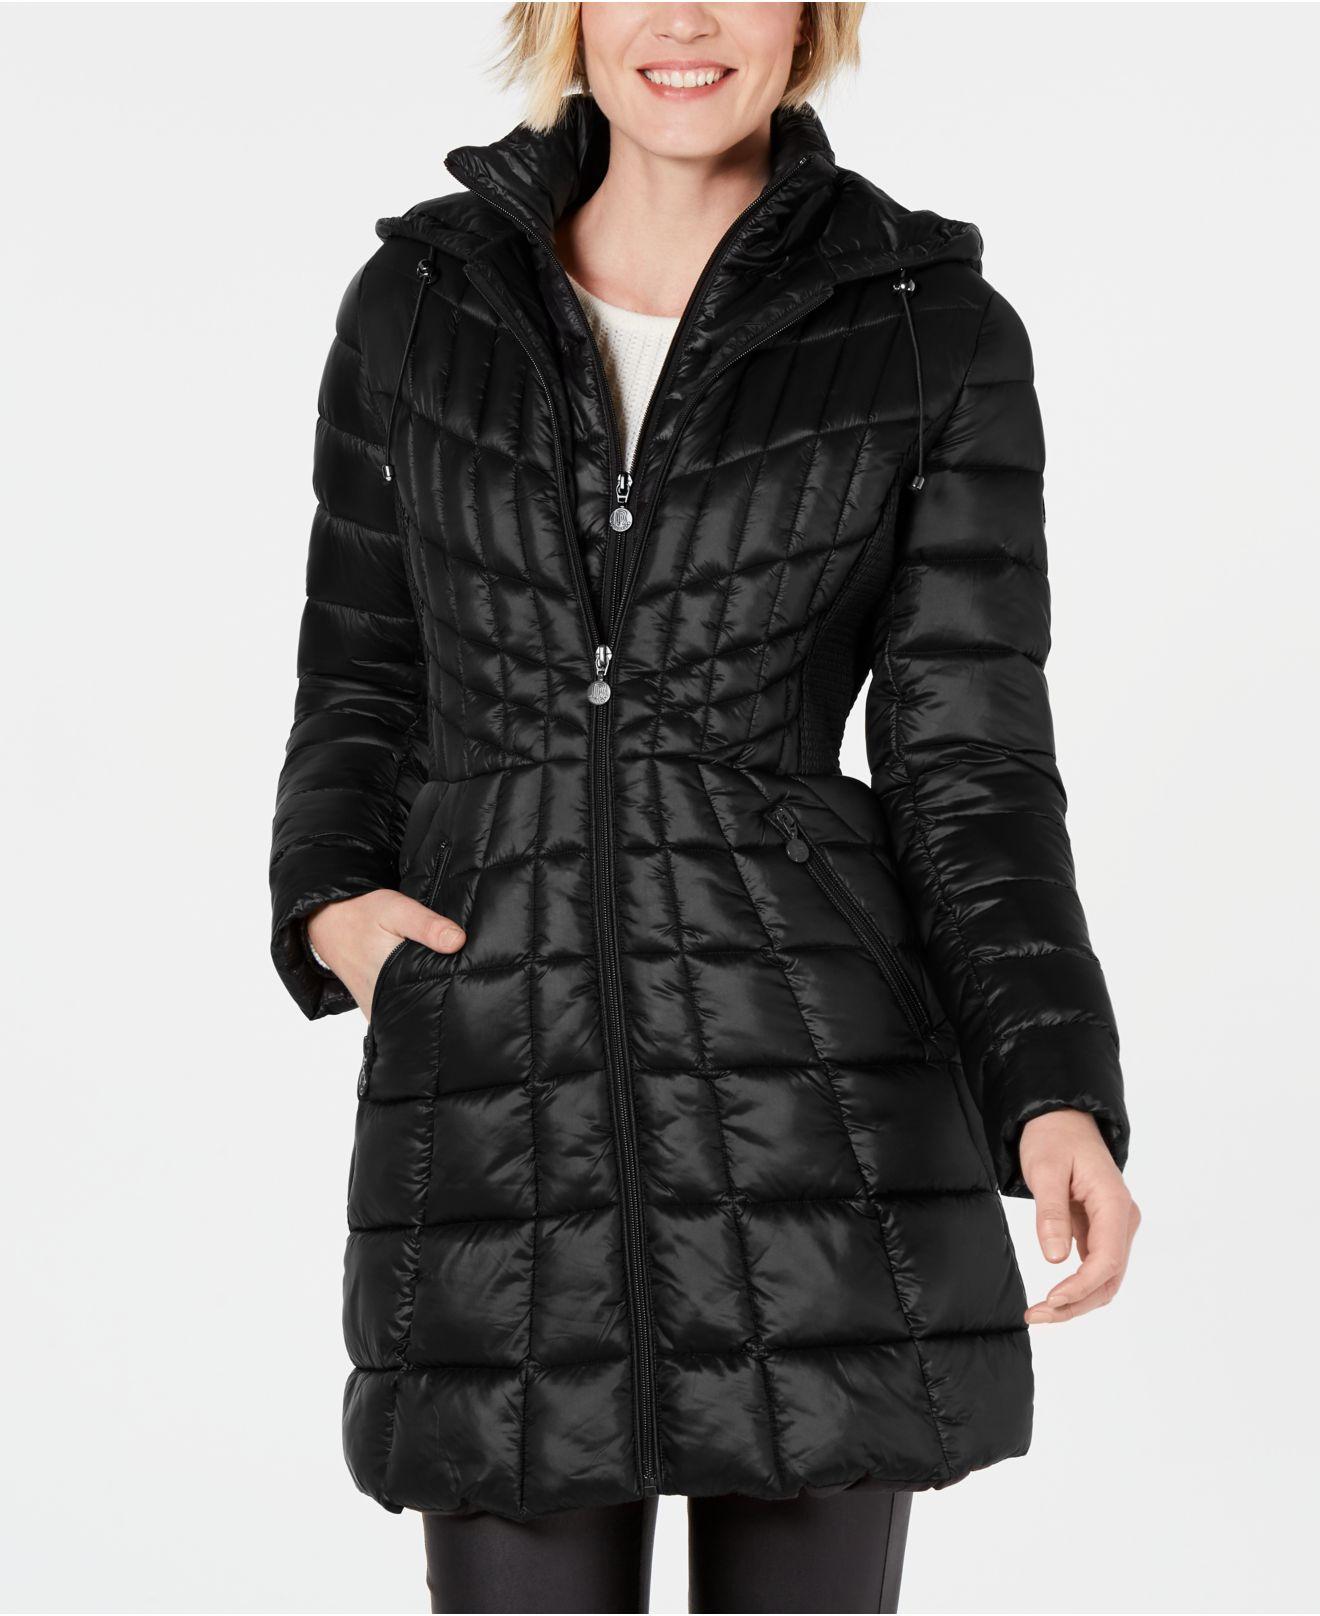 Bernardo Synthetic Hooded Packable Puffer Coat in Black - Lyst